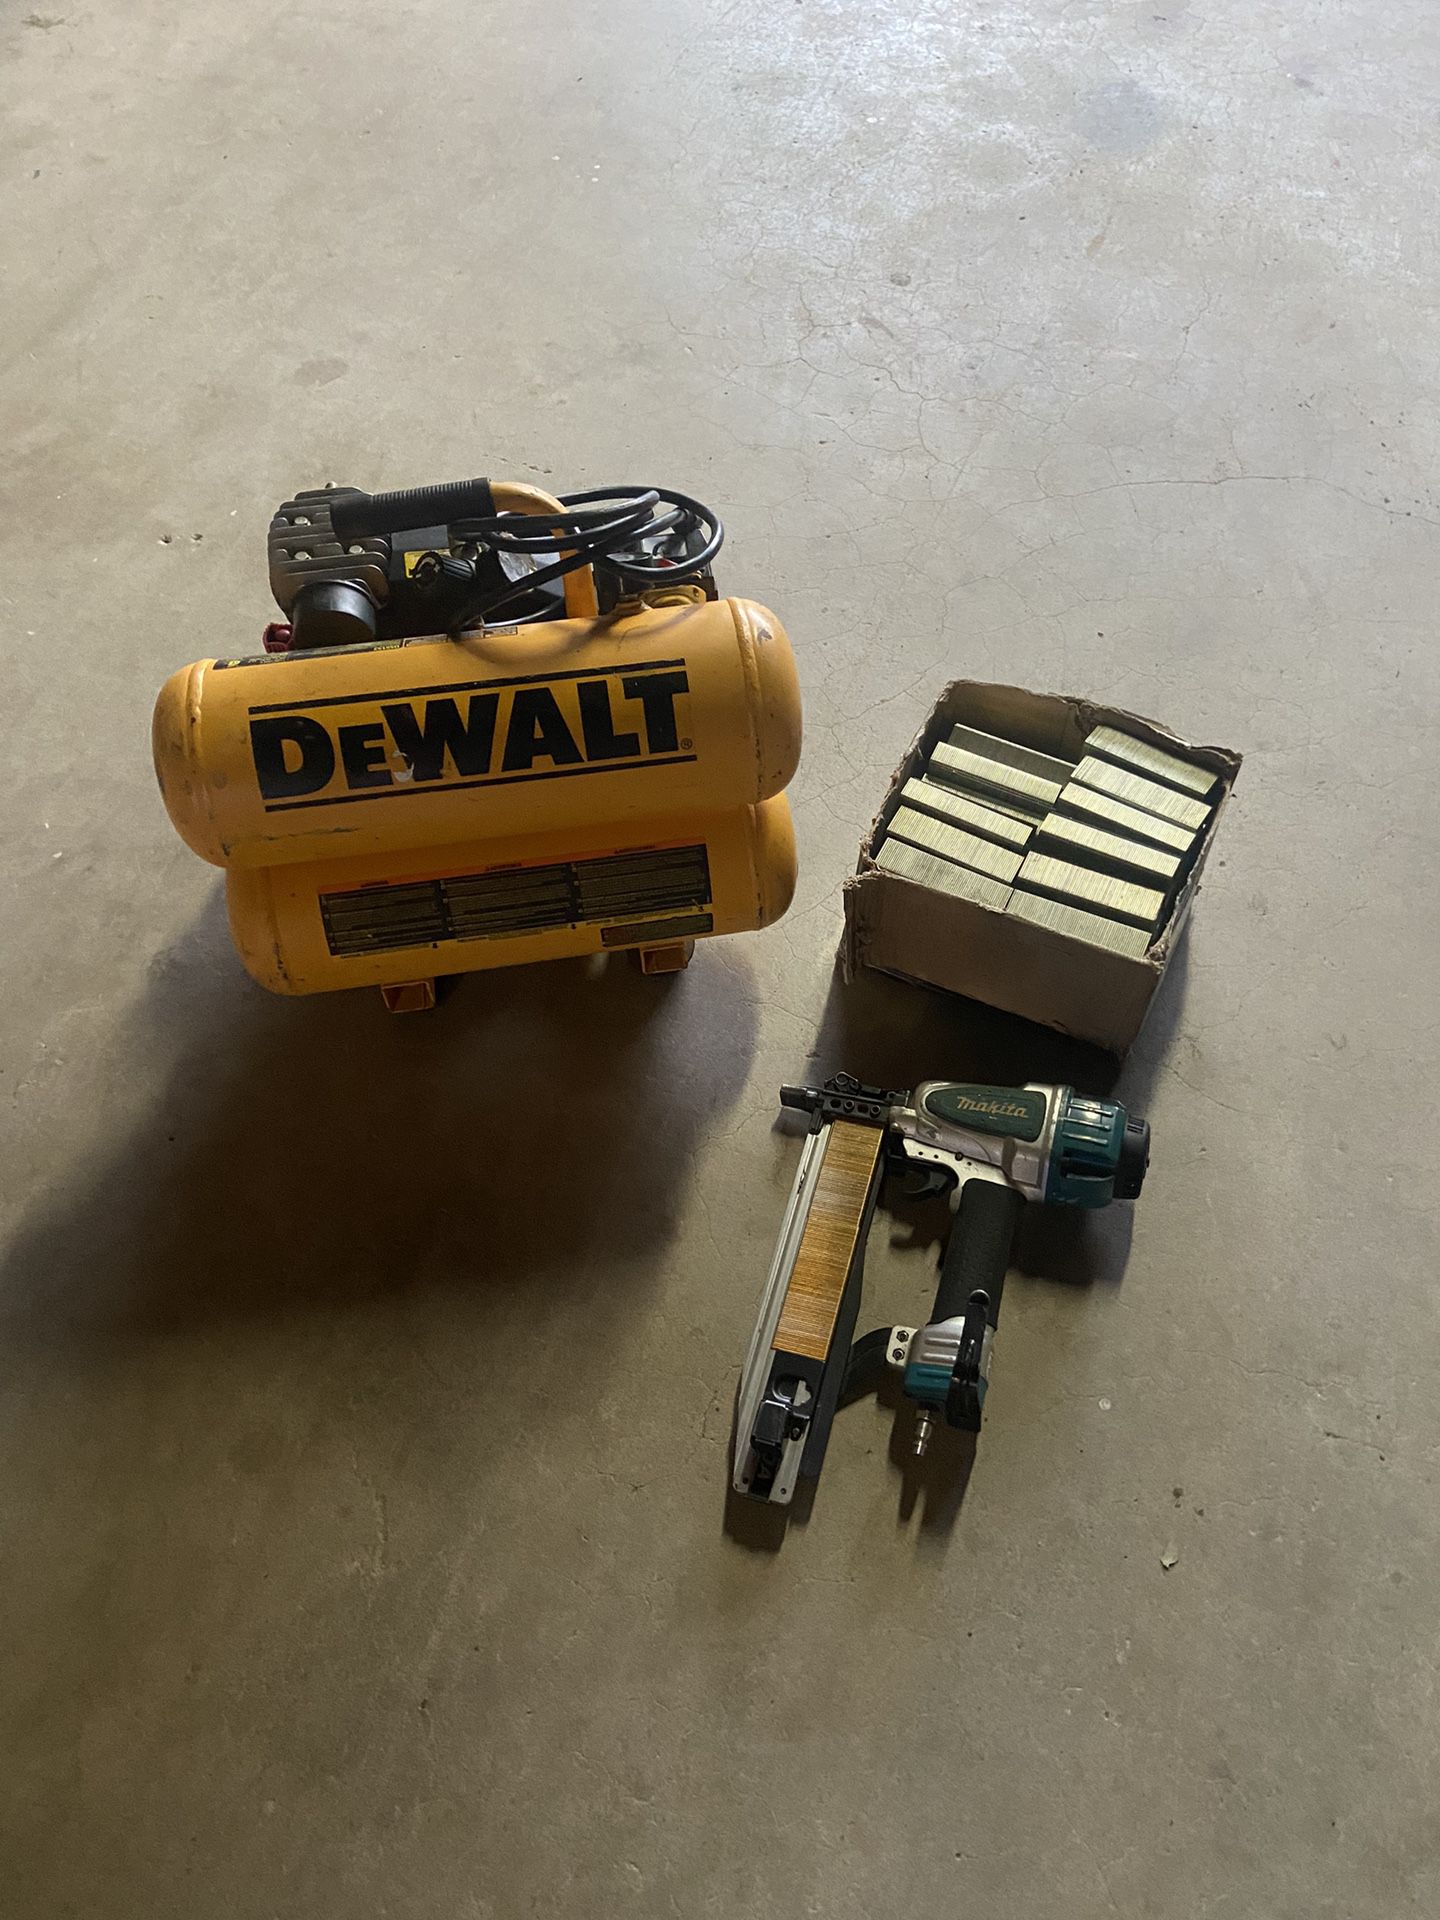 Dewalt Compressor and Makita Nail Gun